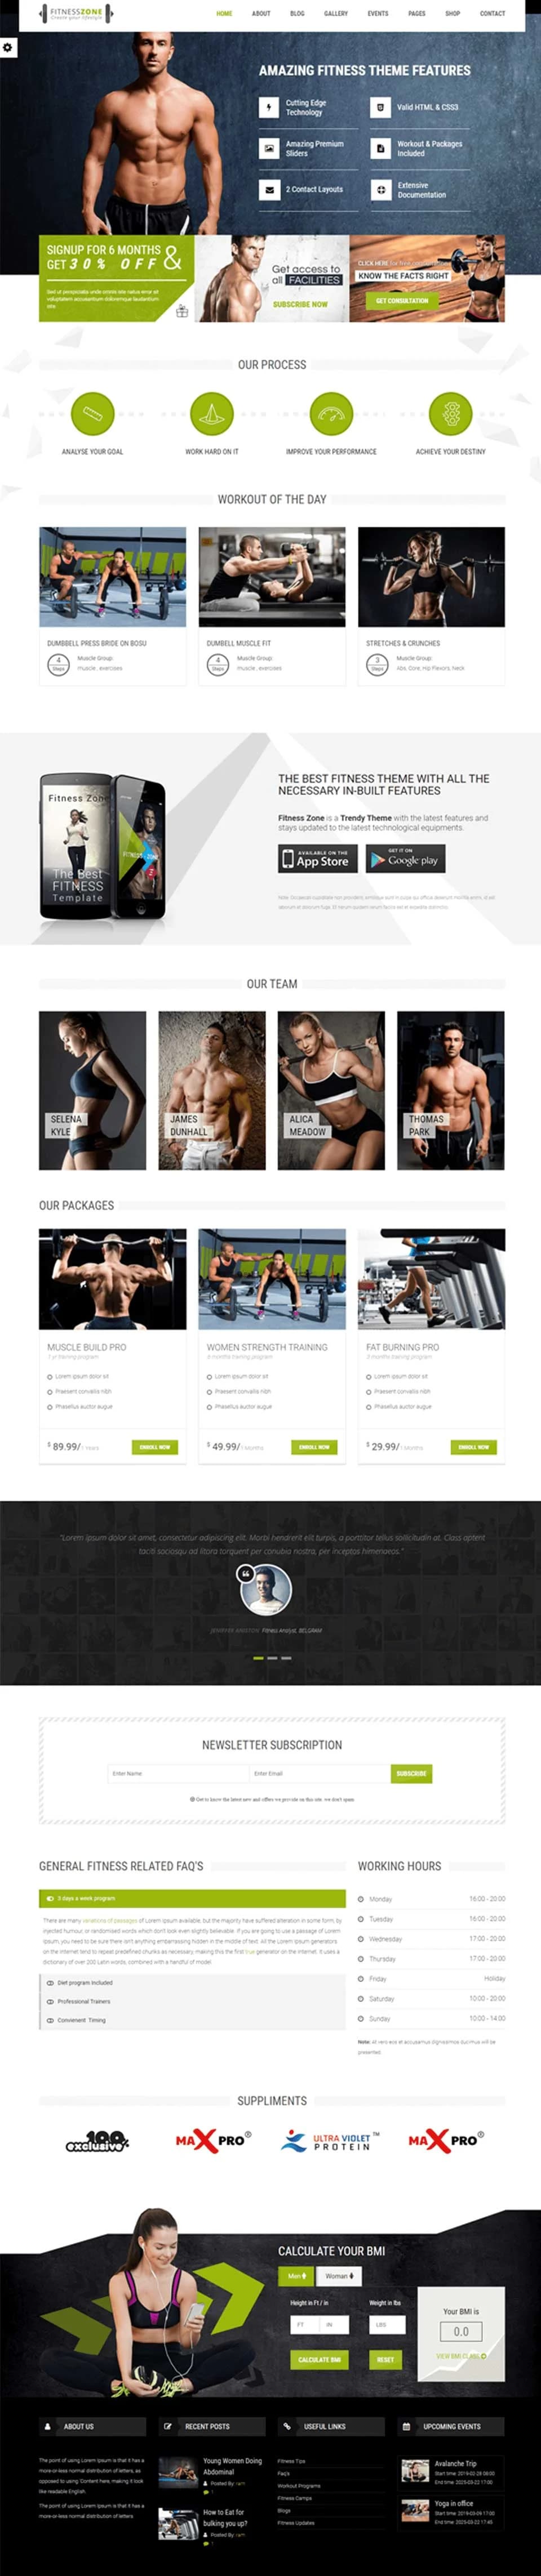 fitness website portfolio